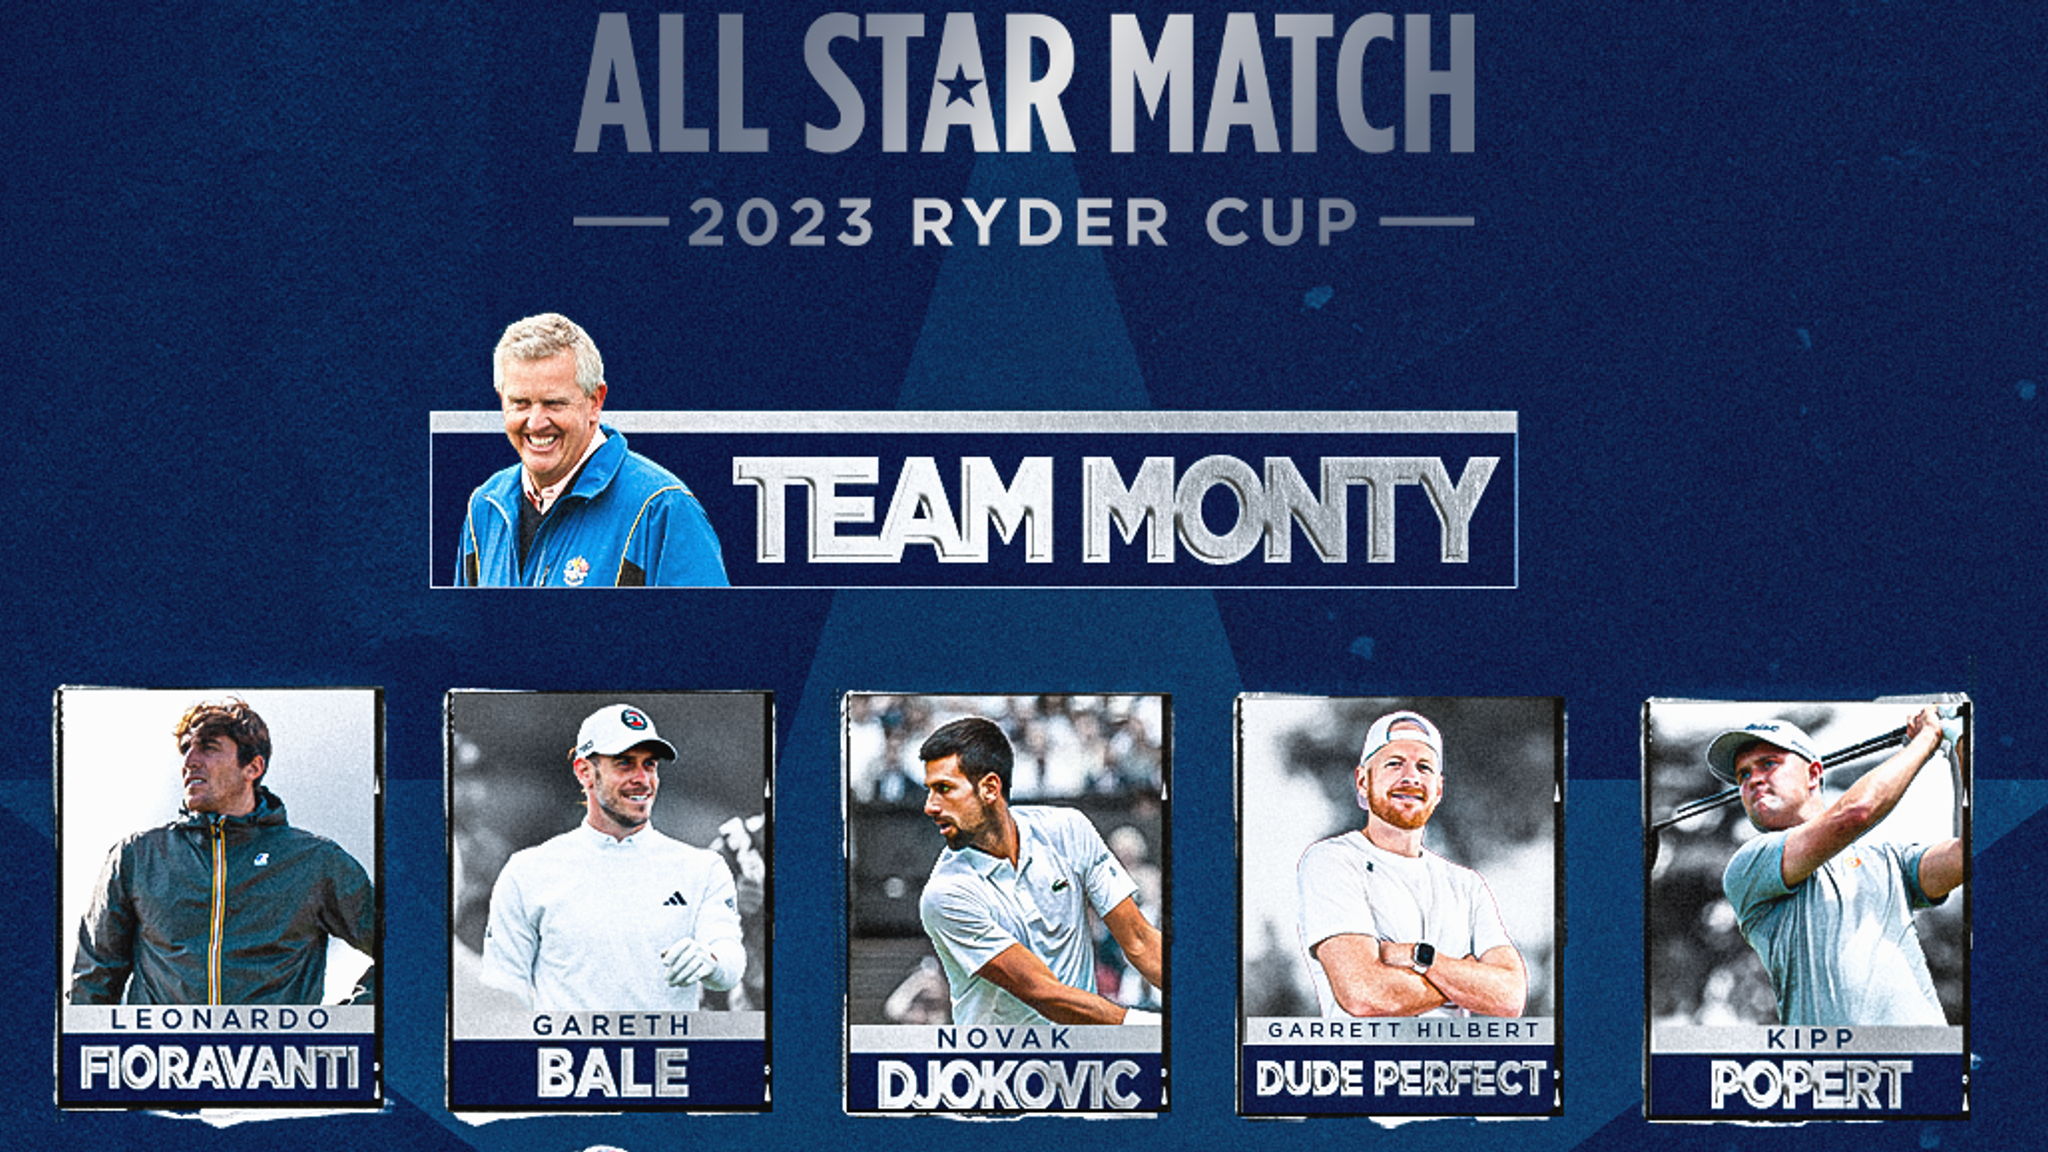 Ryder Cup celebrity all-star match Gareth Bale, Novak Djokovic and Carlos Sainz to feature in Rome Golf News Sky Sports